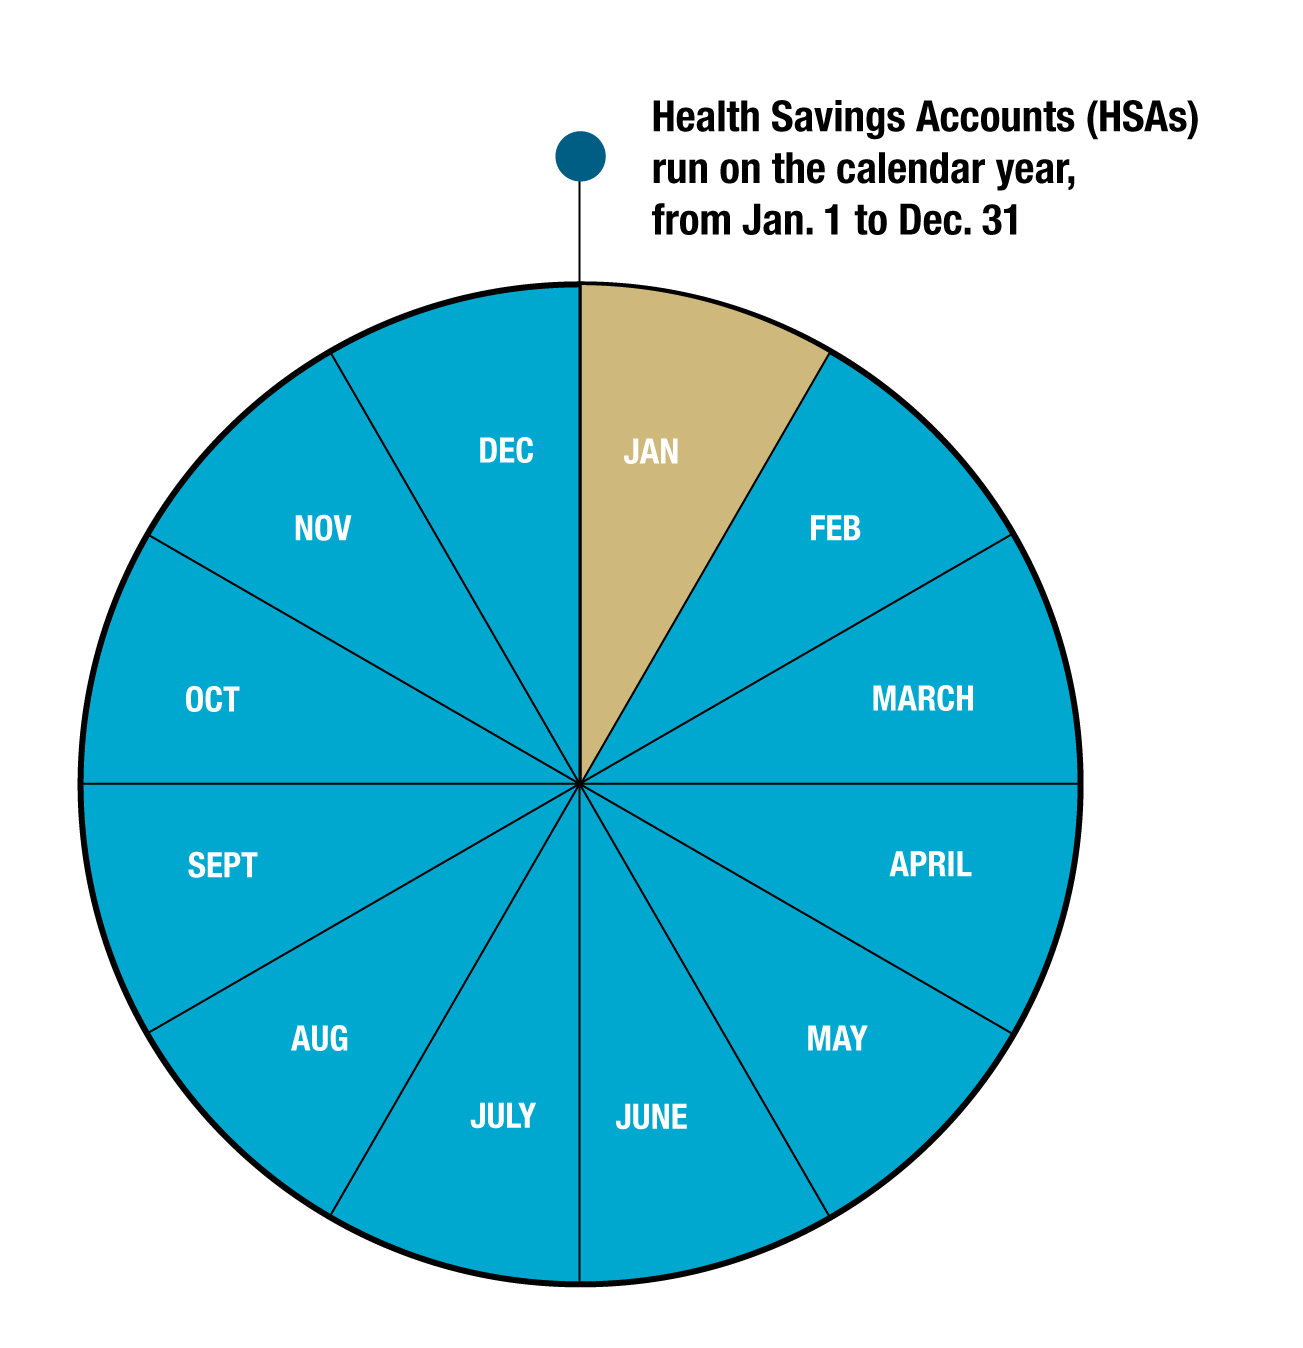 Health Savings Accounts (HSAs) run on the calendar year, from Jan. 1 to Dec. 31